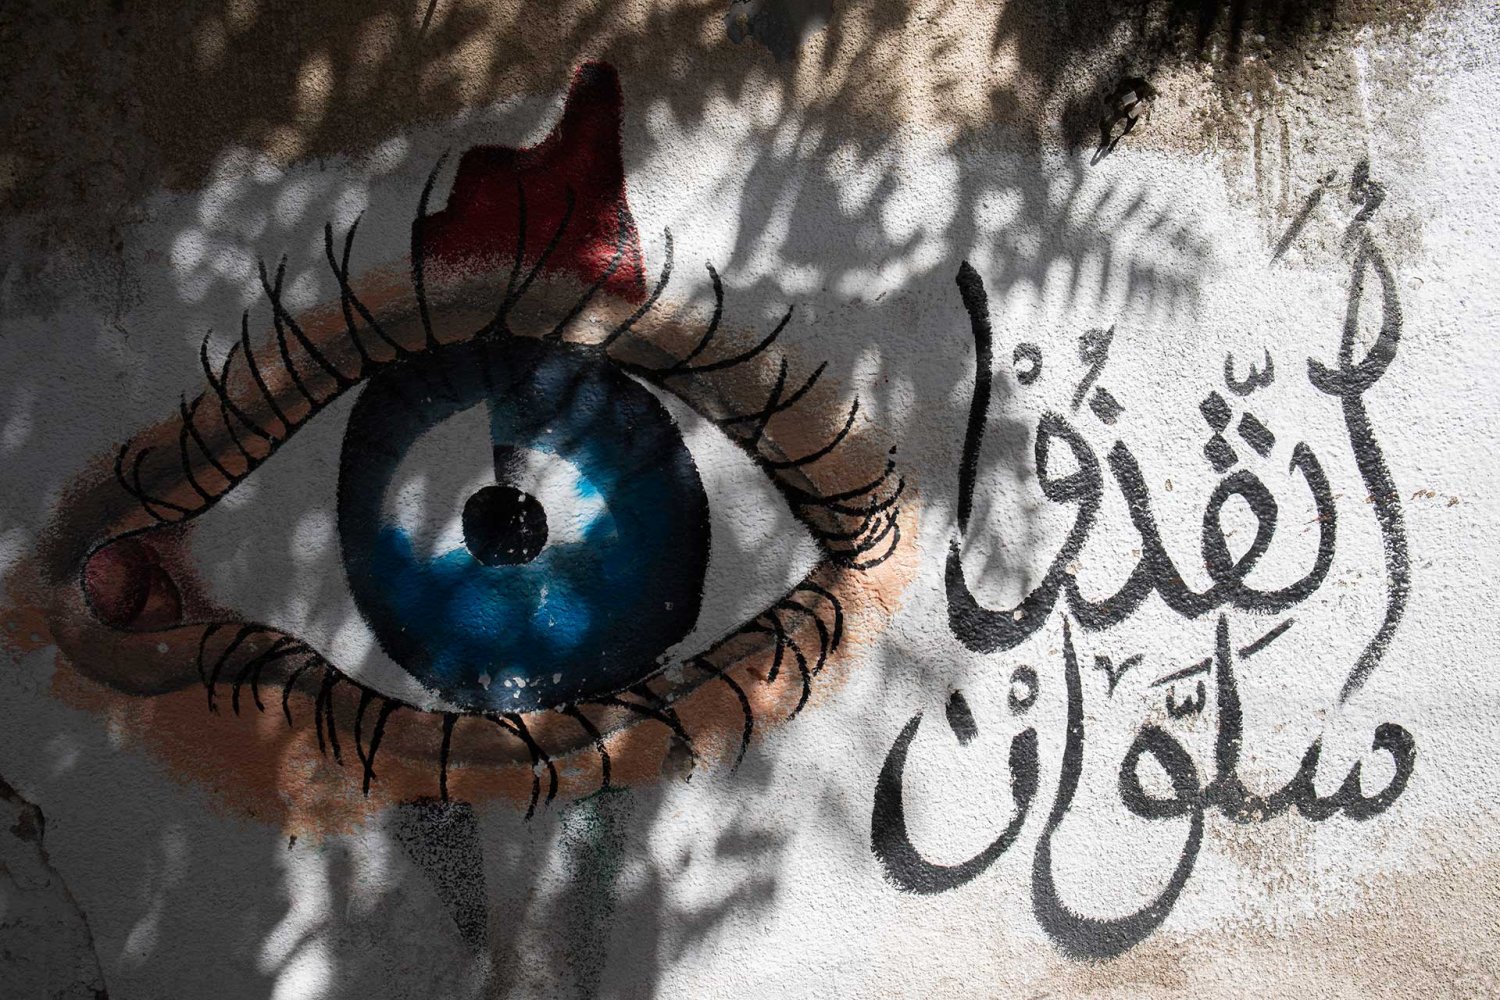 Grafitti eyes painted on a wall in Silwan, Jerusalem, as part of an art installation